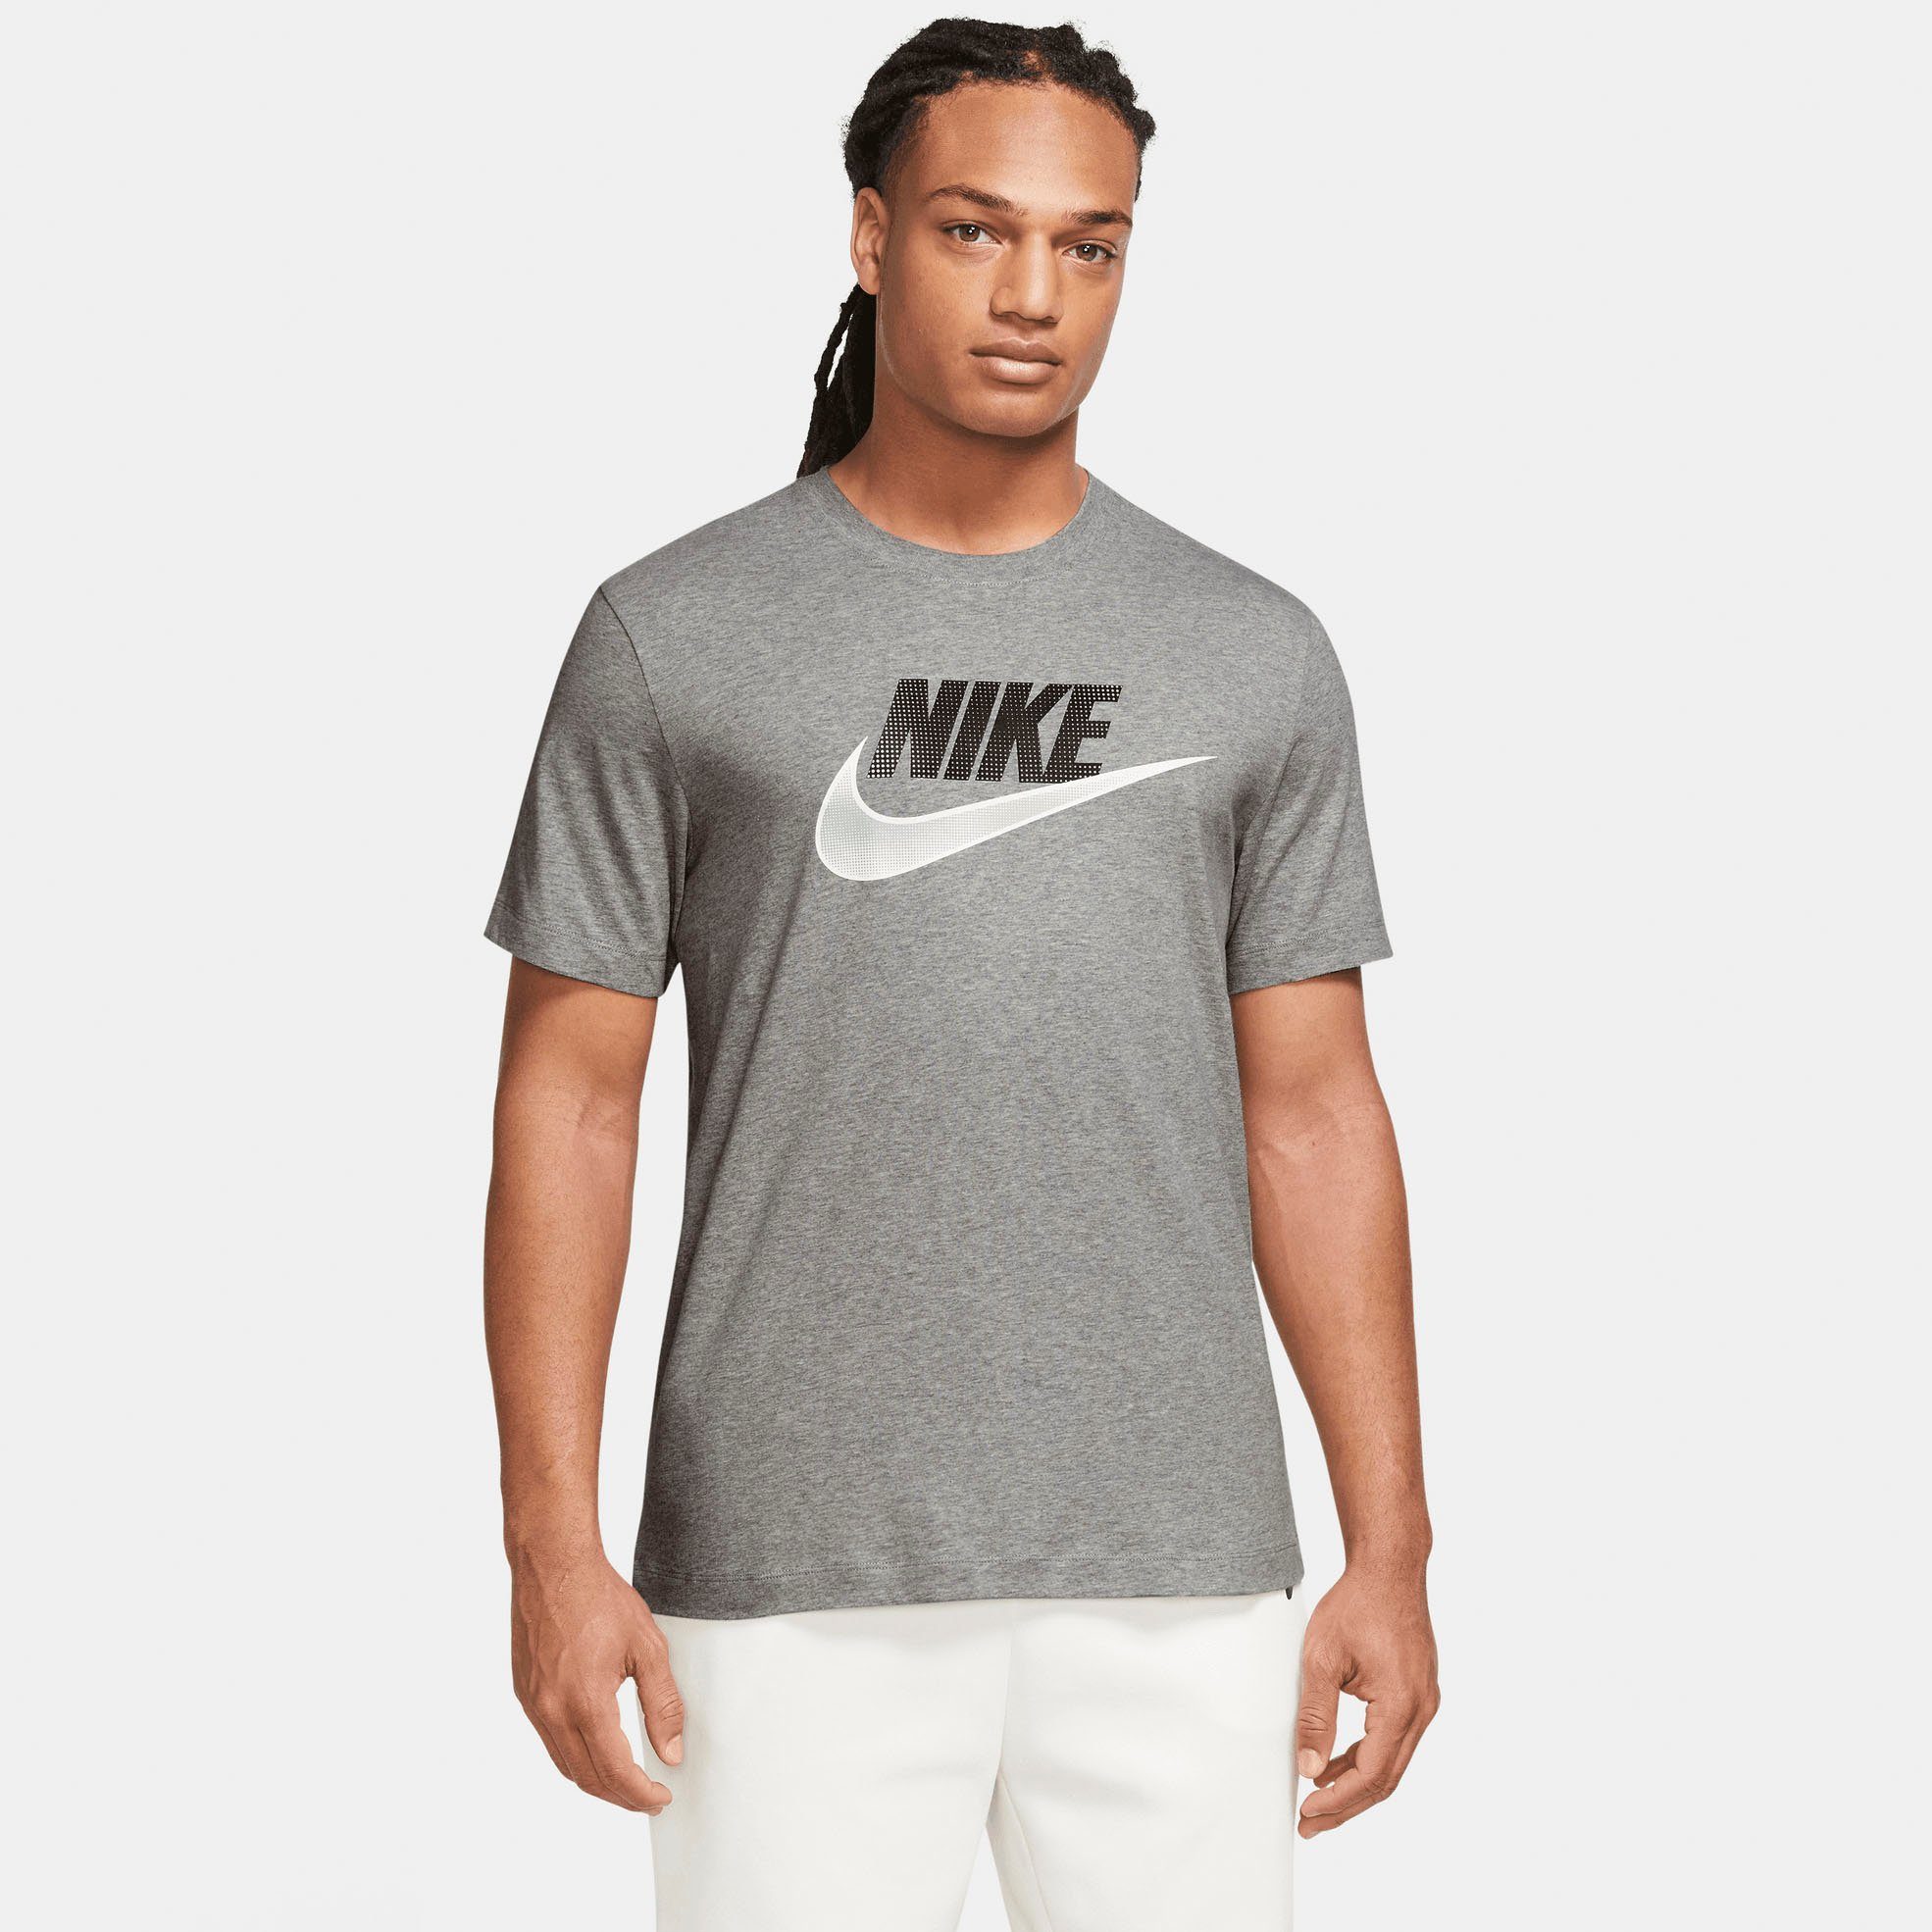 T-Shirt GREY Nike HEATHER DK Sportswear Men's T-Shirt